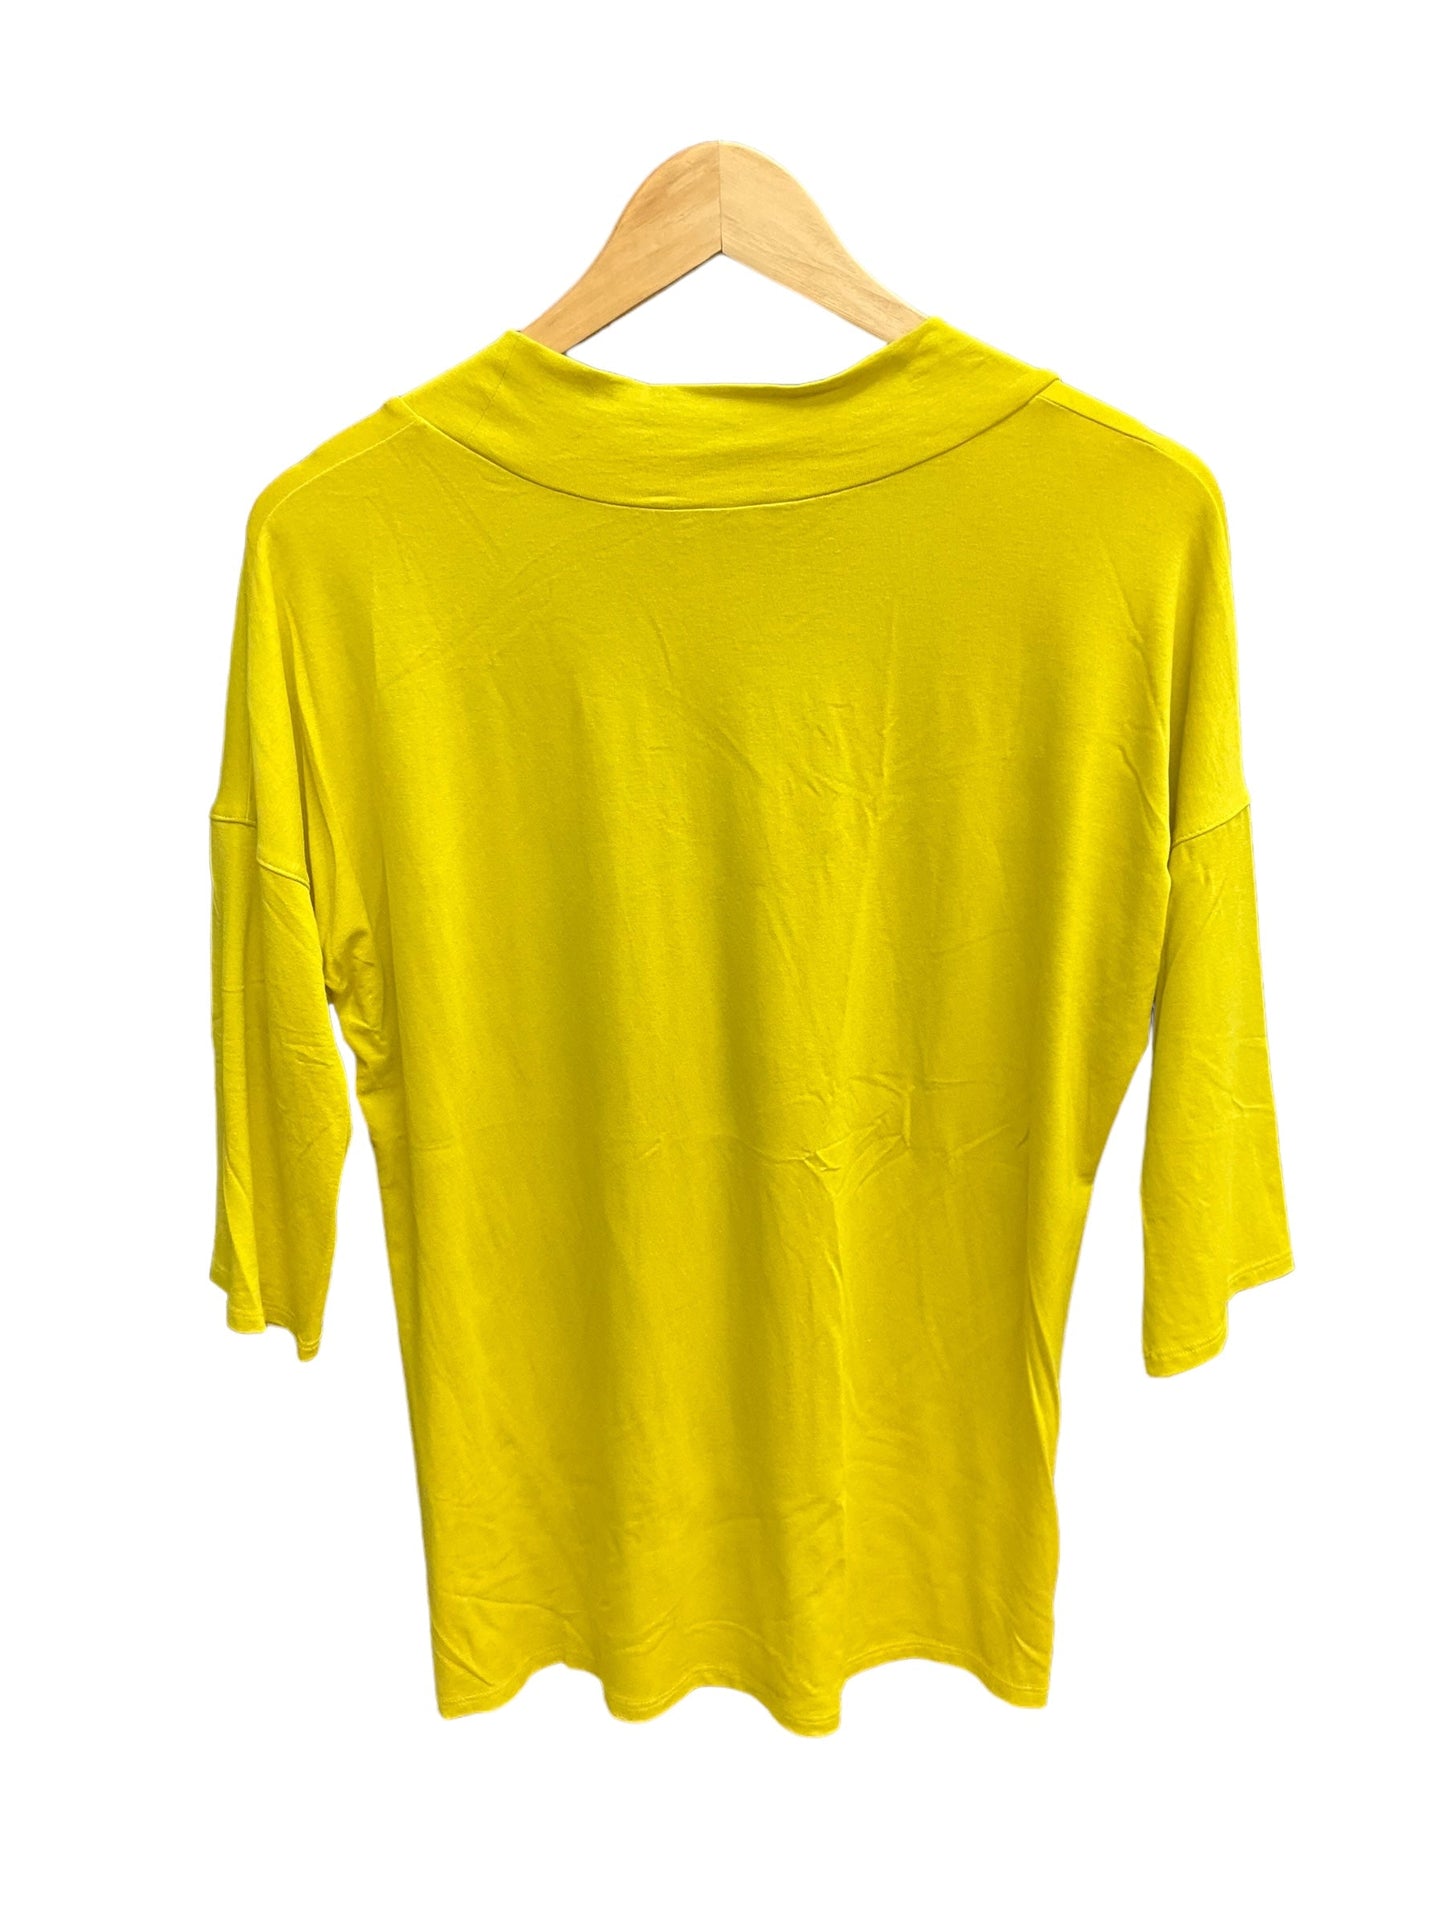 Yellow Top 3/4 Sleeve Anne Klein, Size Xl